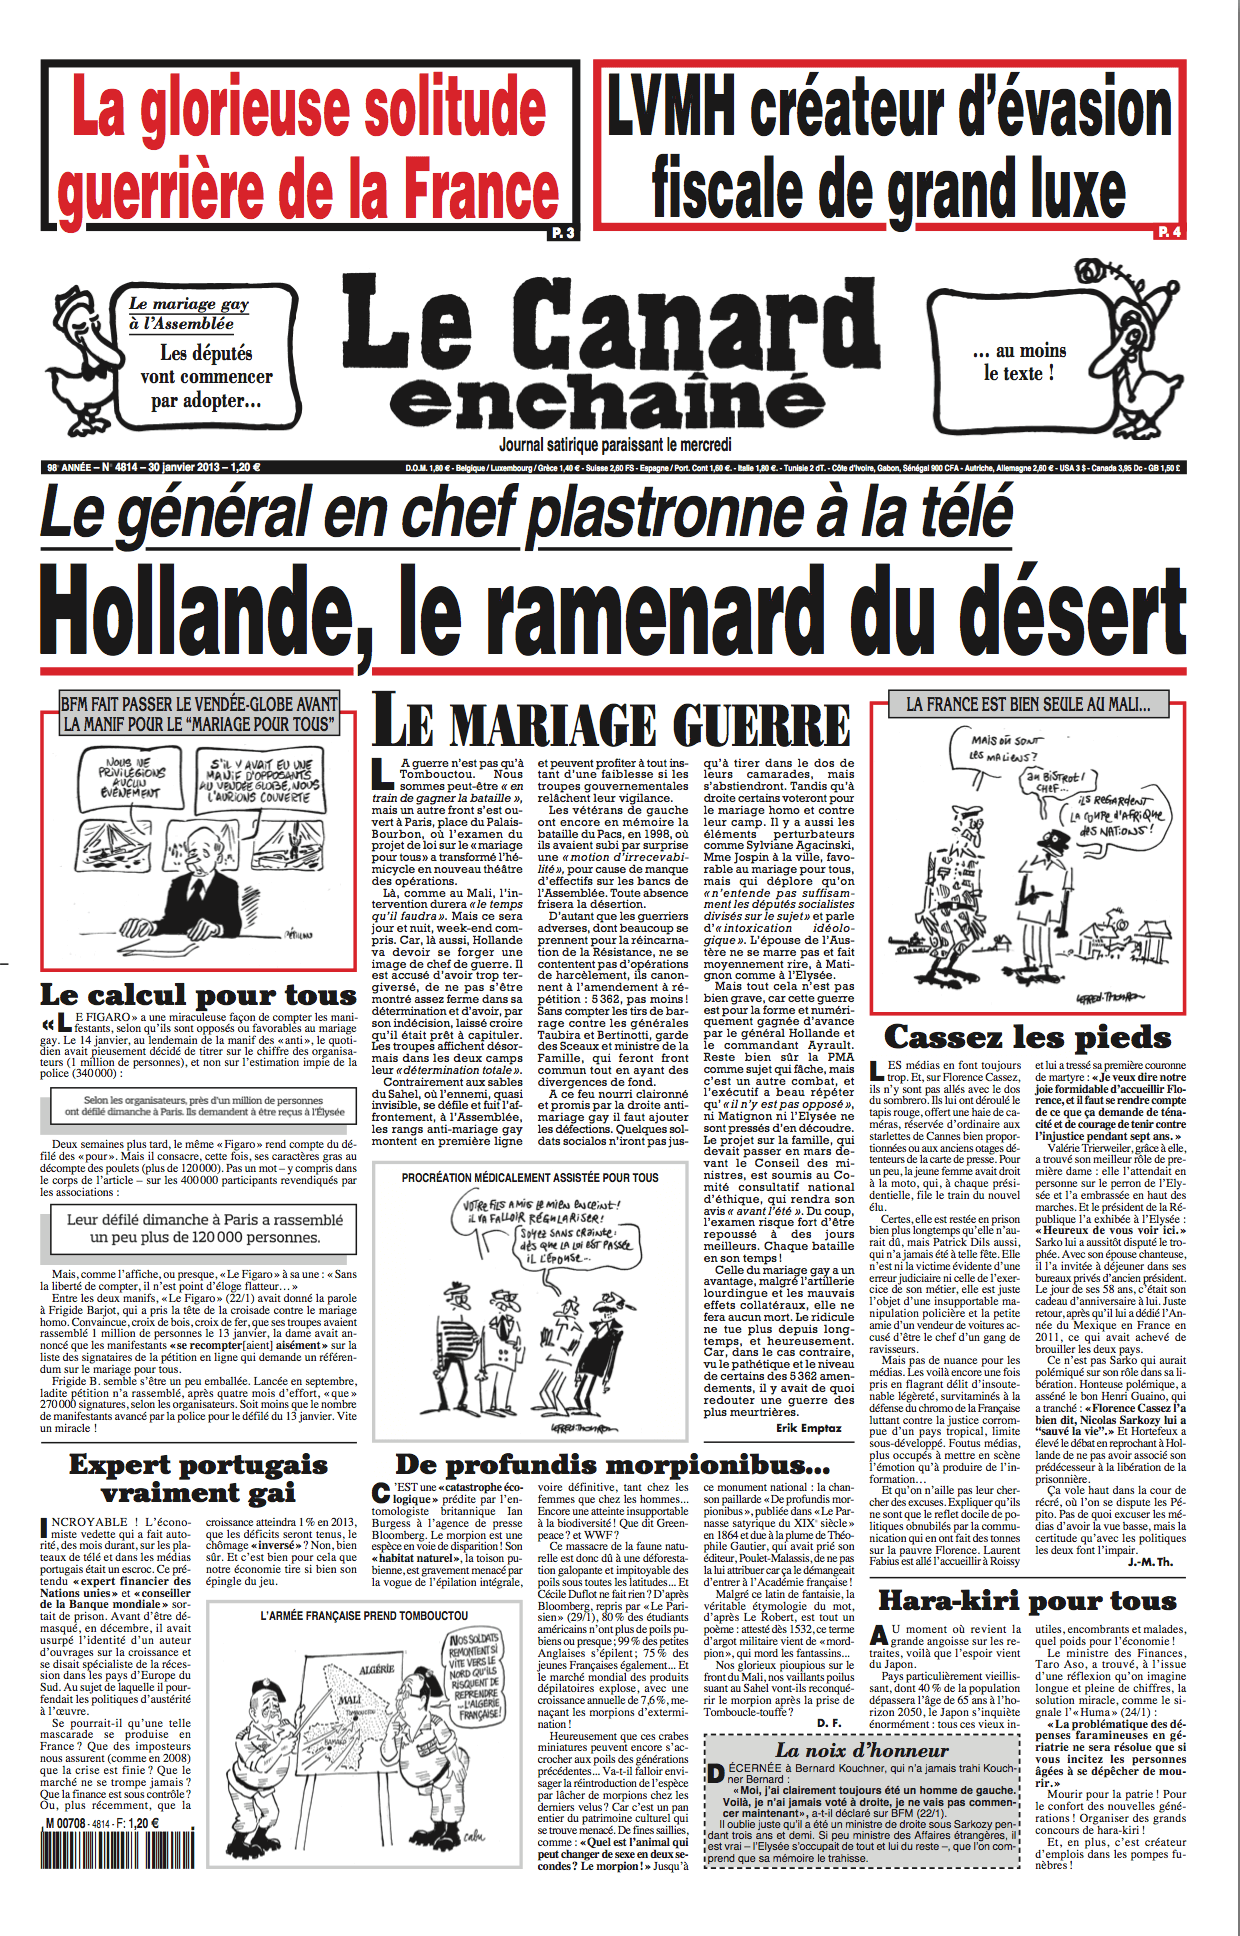 france newspapers 9 Le Canard enchaine